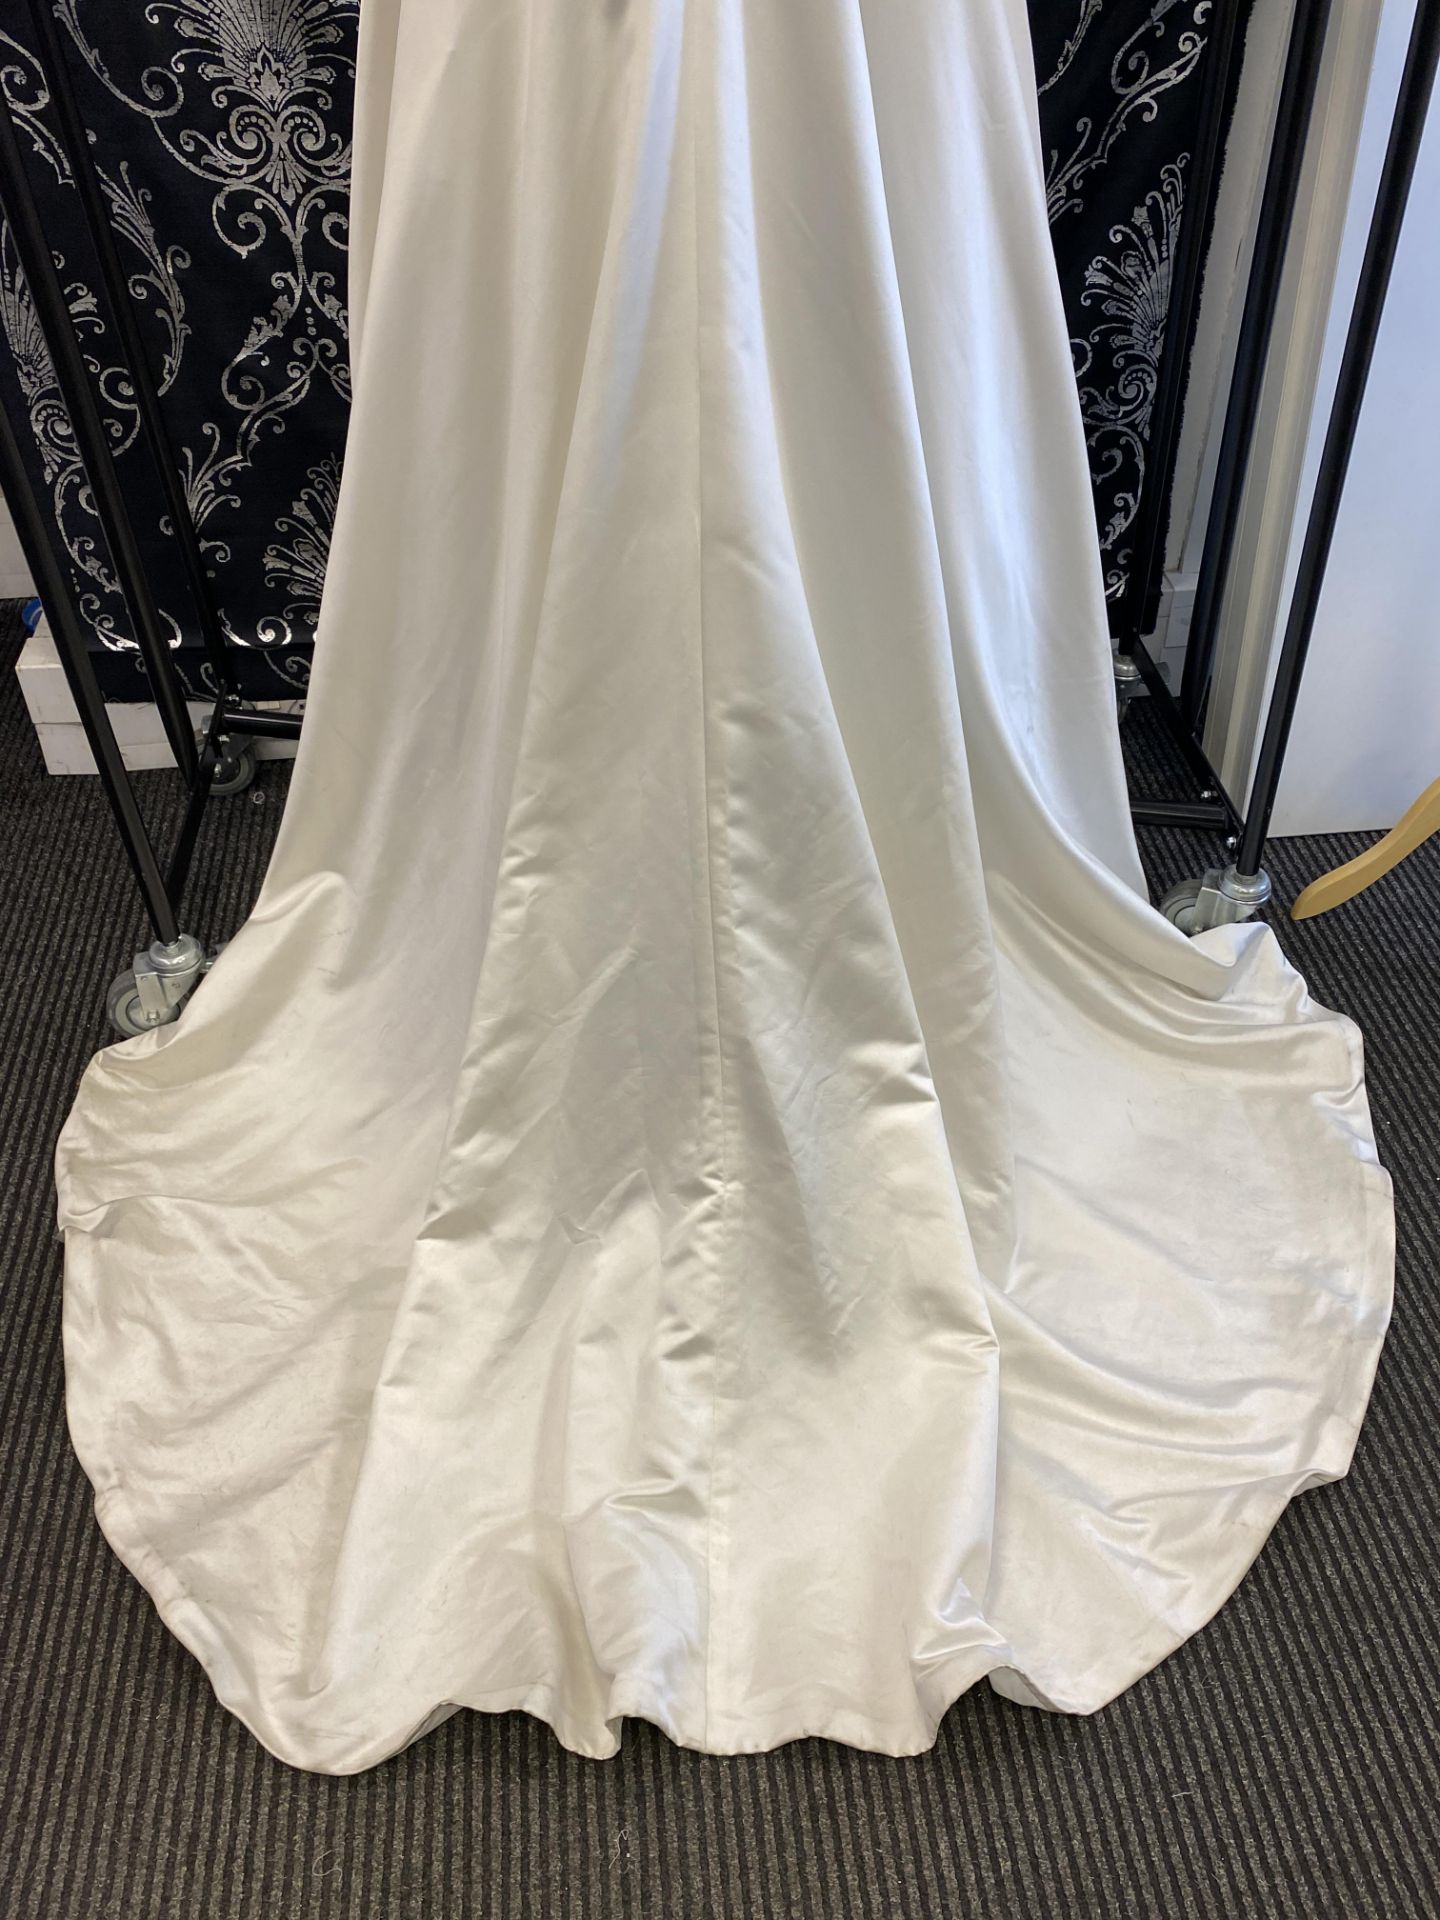 1 x MIA MIA 'Estelle' Timeless Satin Empire Line Designer Wedding Dress Bridal Gown RRP£1,000 UK12 - Image 8 of 8